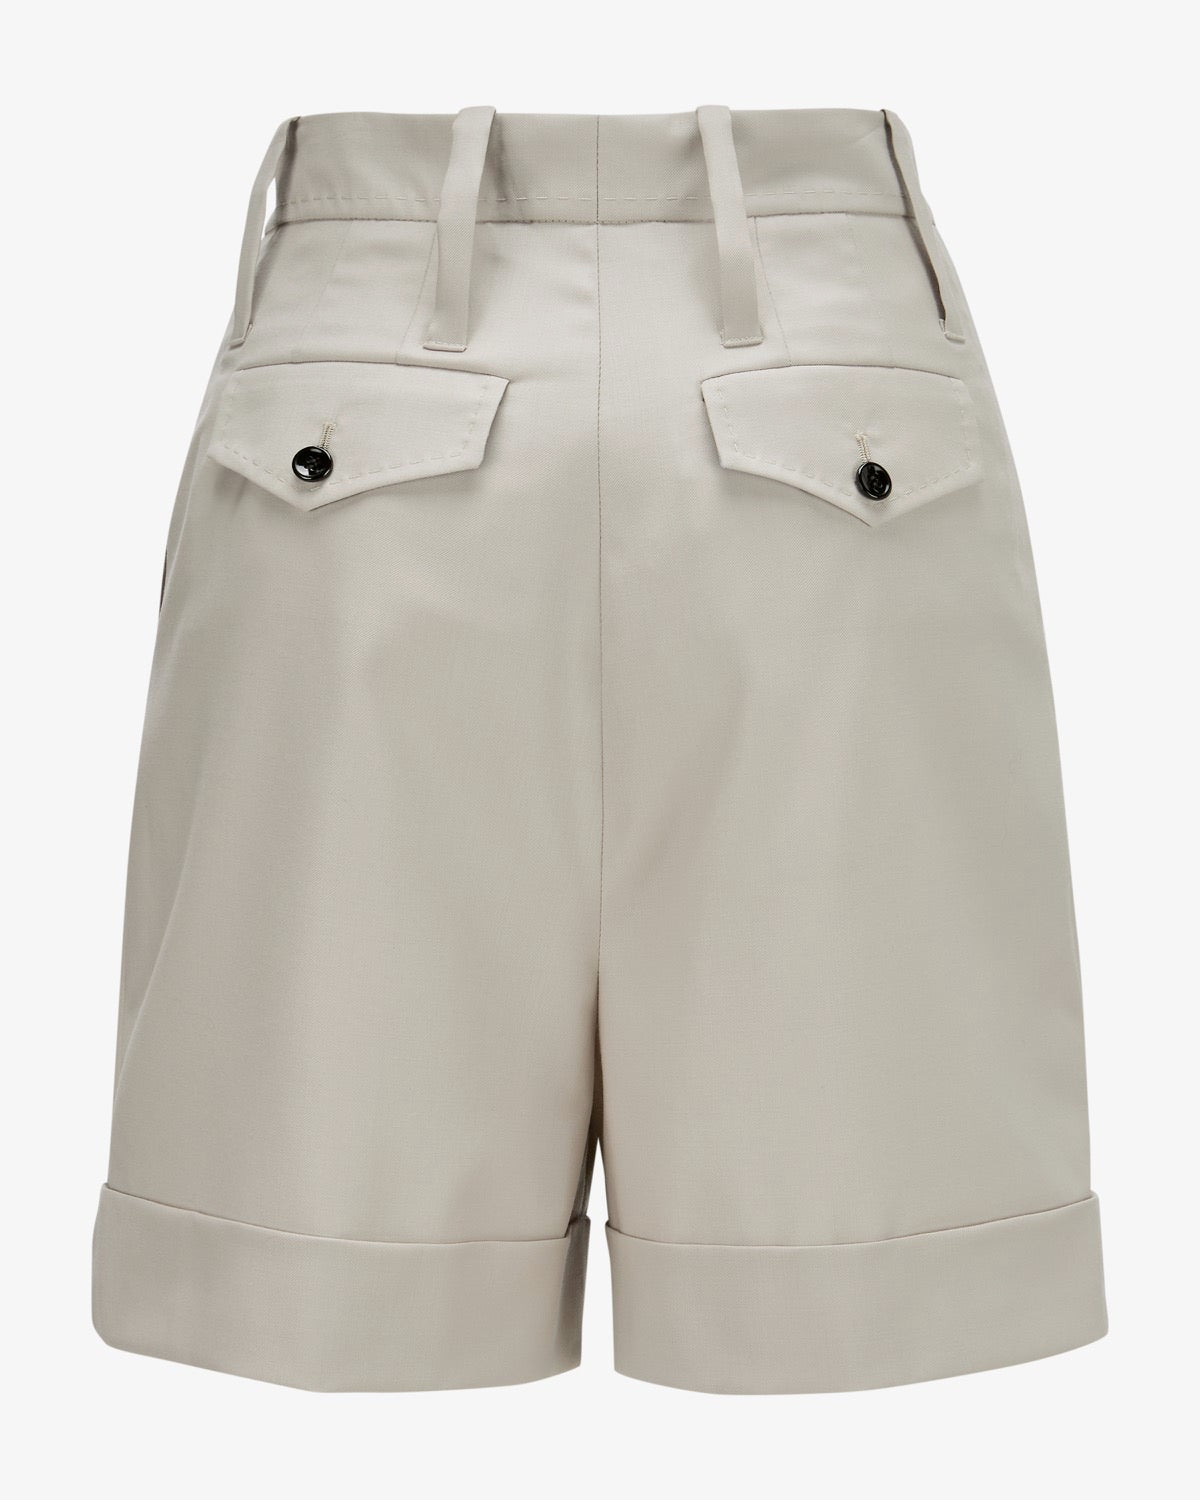 wooltwill-shorts-marlene-stone-02.jpg